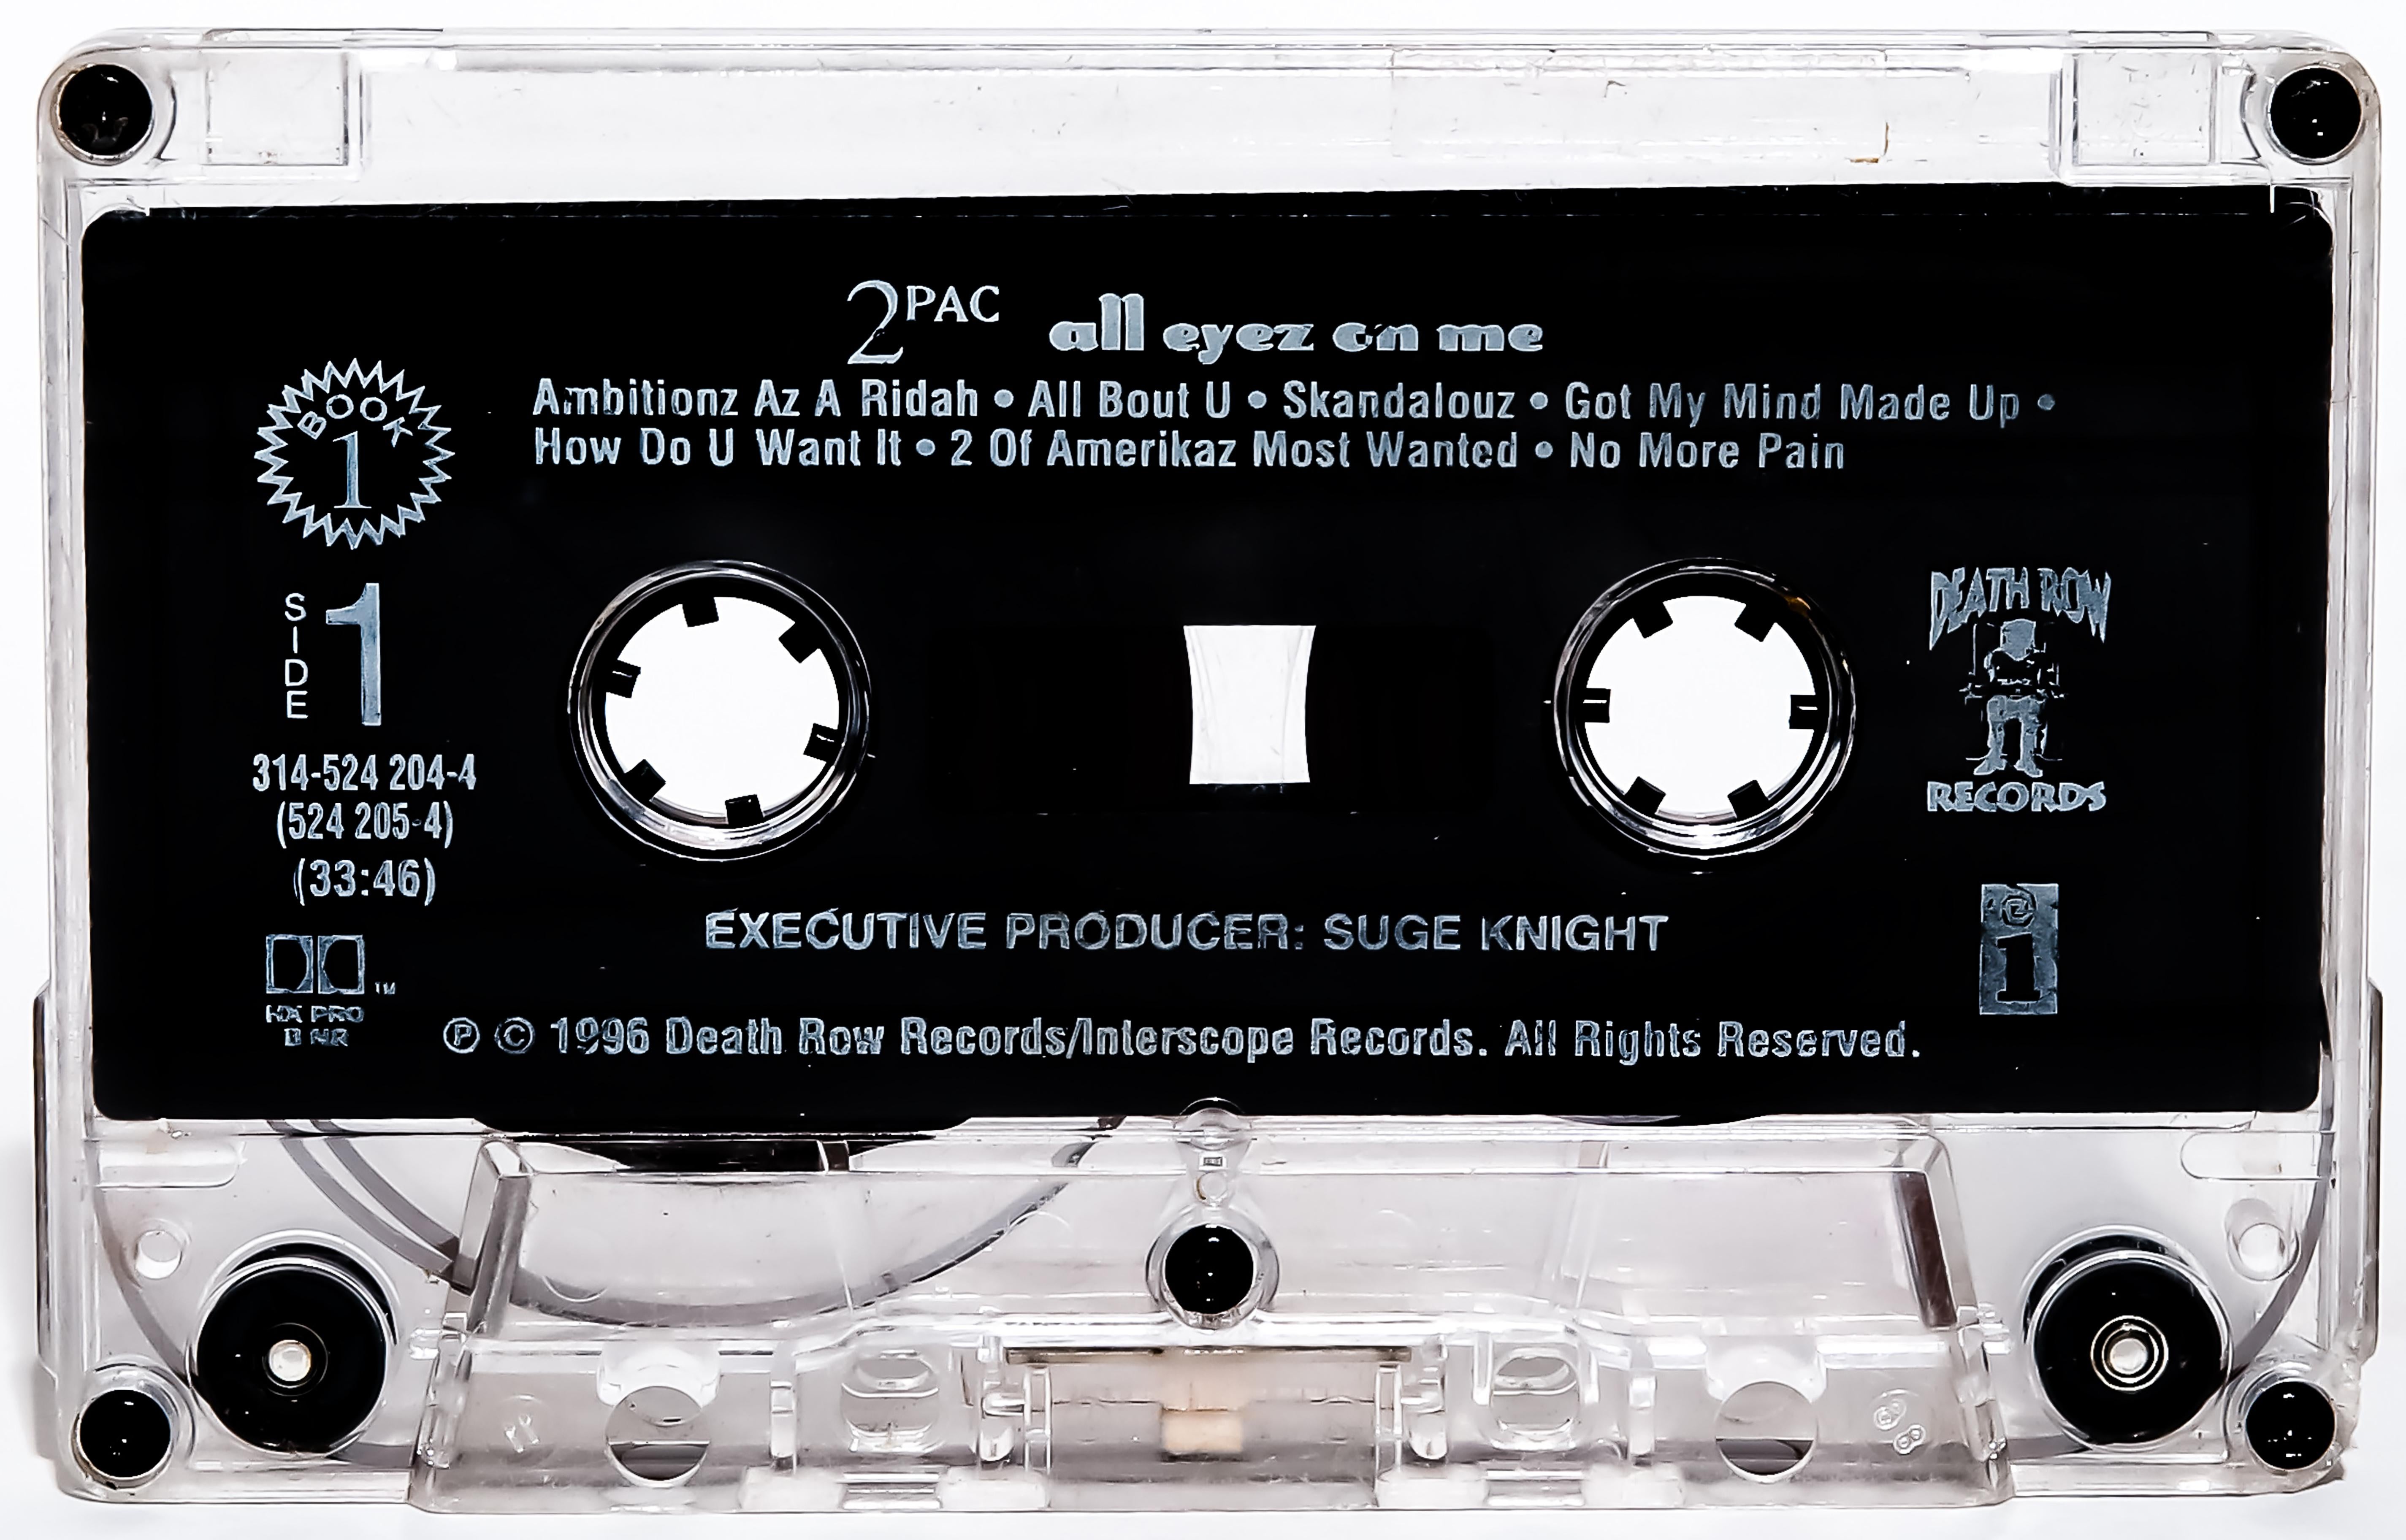 28x40 Tupac Shakur 2pac "All Eyez On Me" Cassette Photographie Pop Art Unsinged